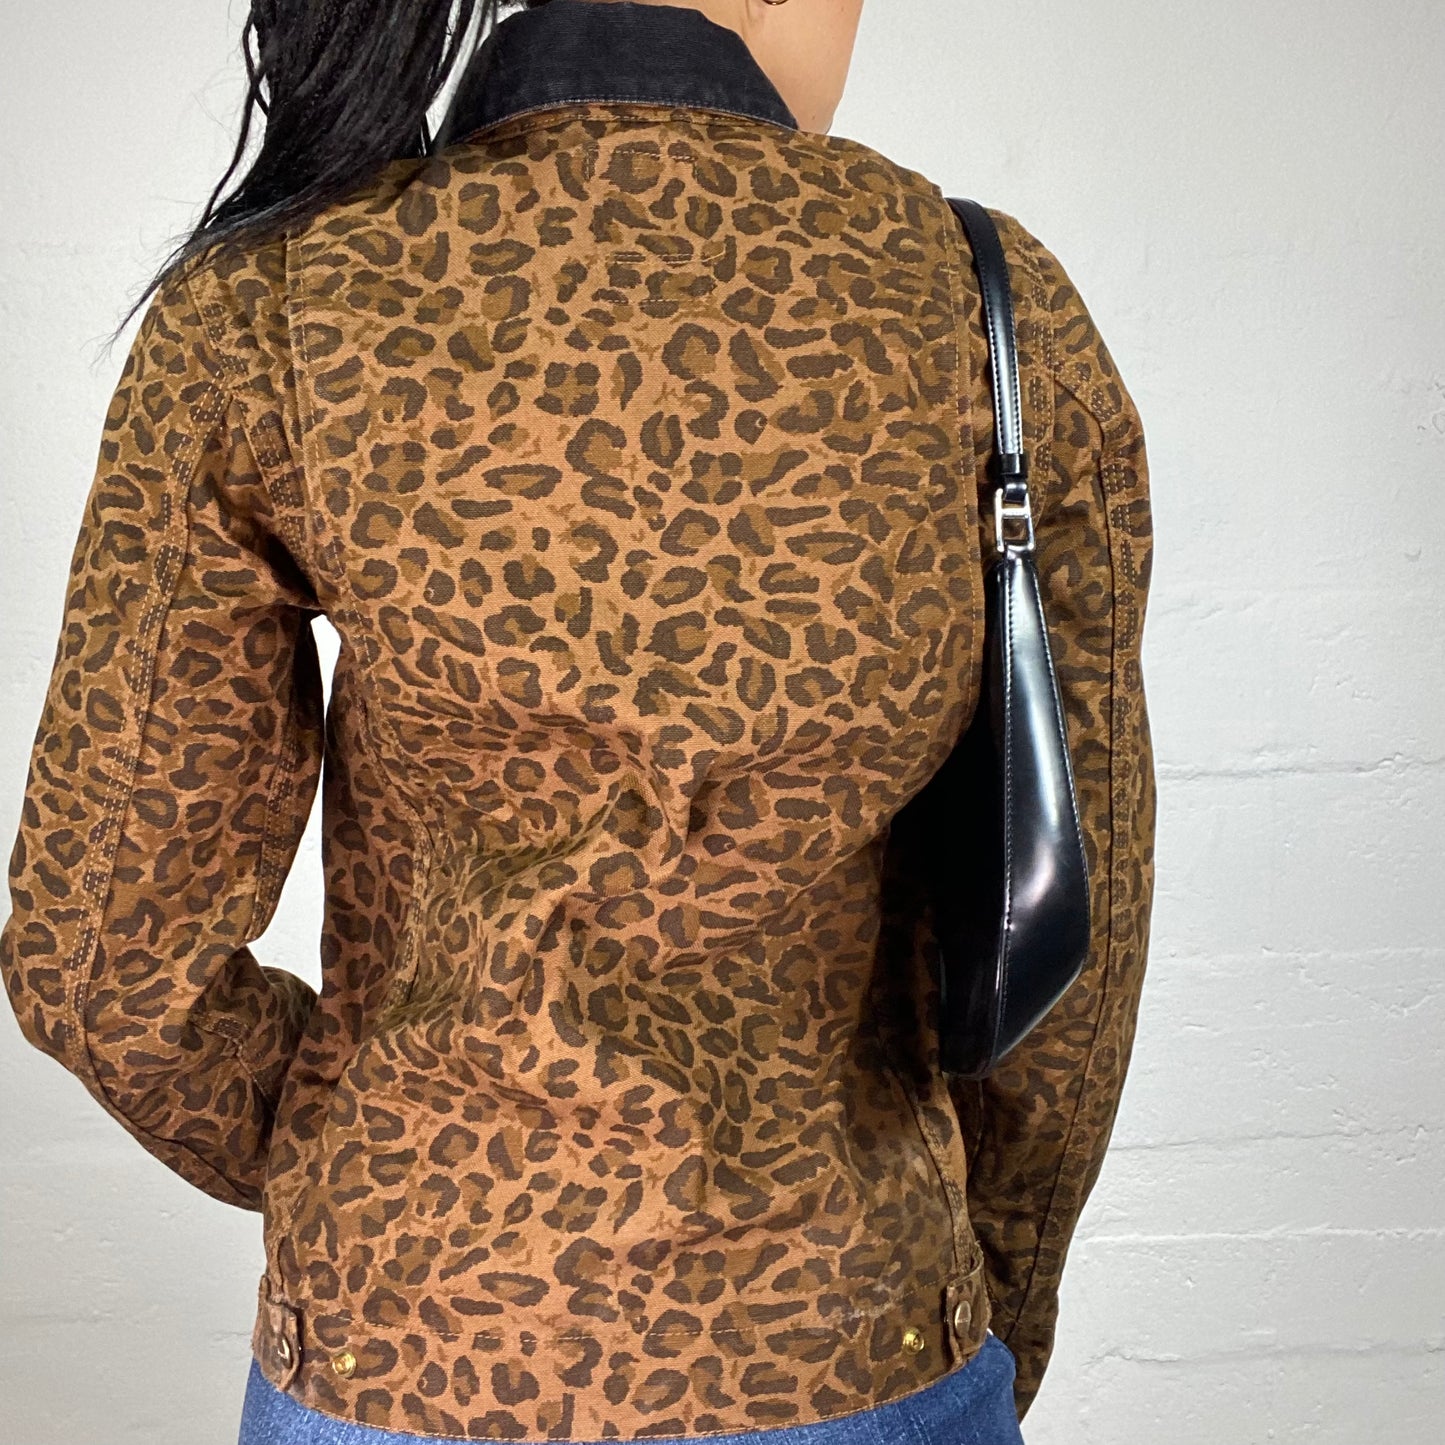 Vintage 2000's Skater Girl Ginger Brown Leo Print Zip Up Collared Jacket (XS)